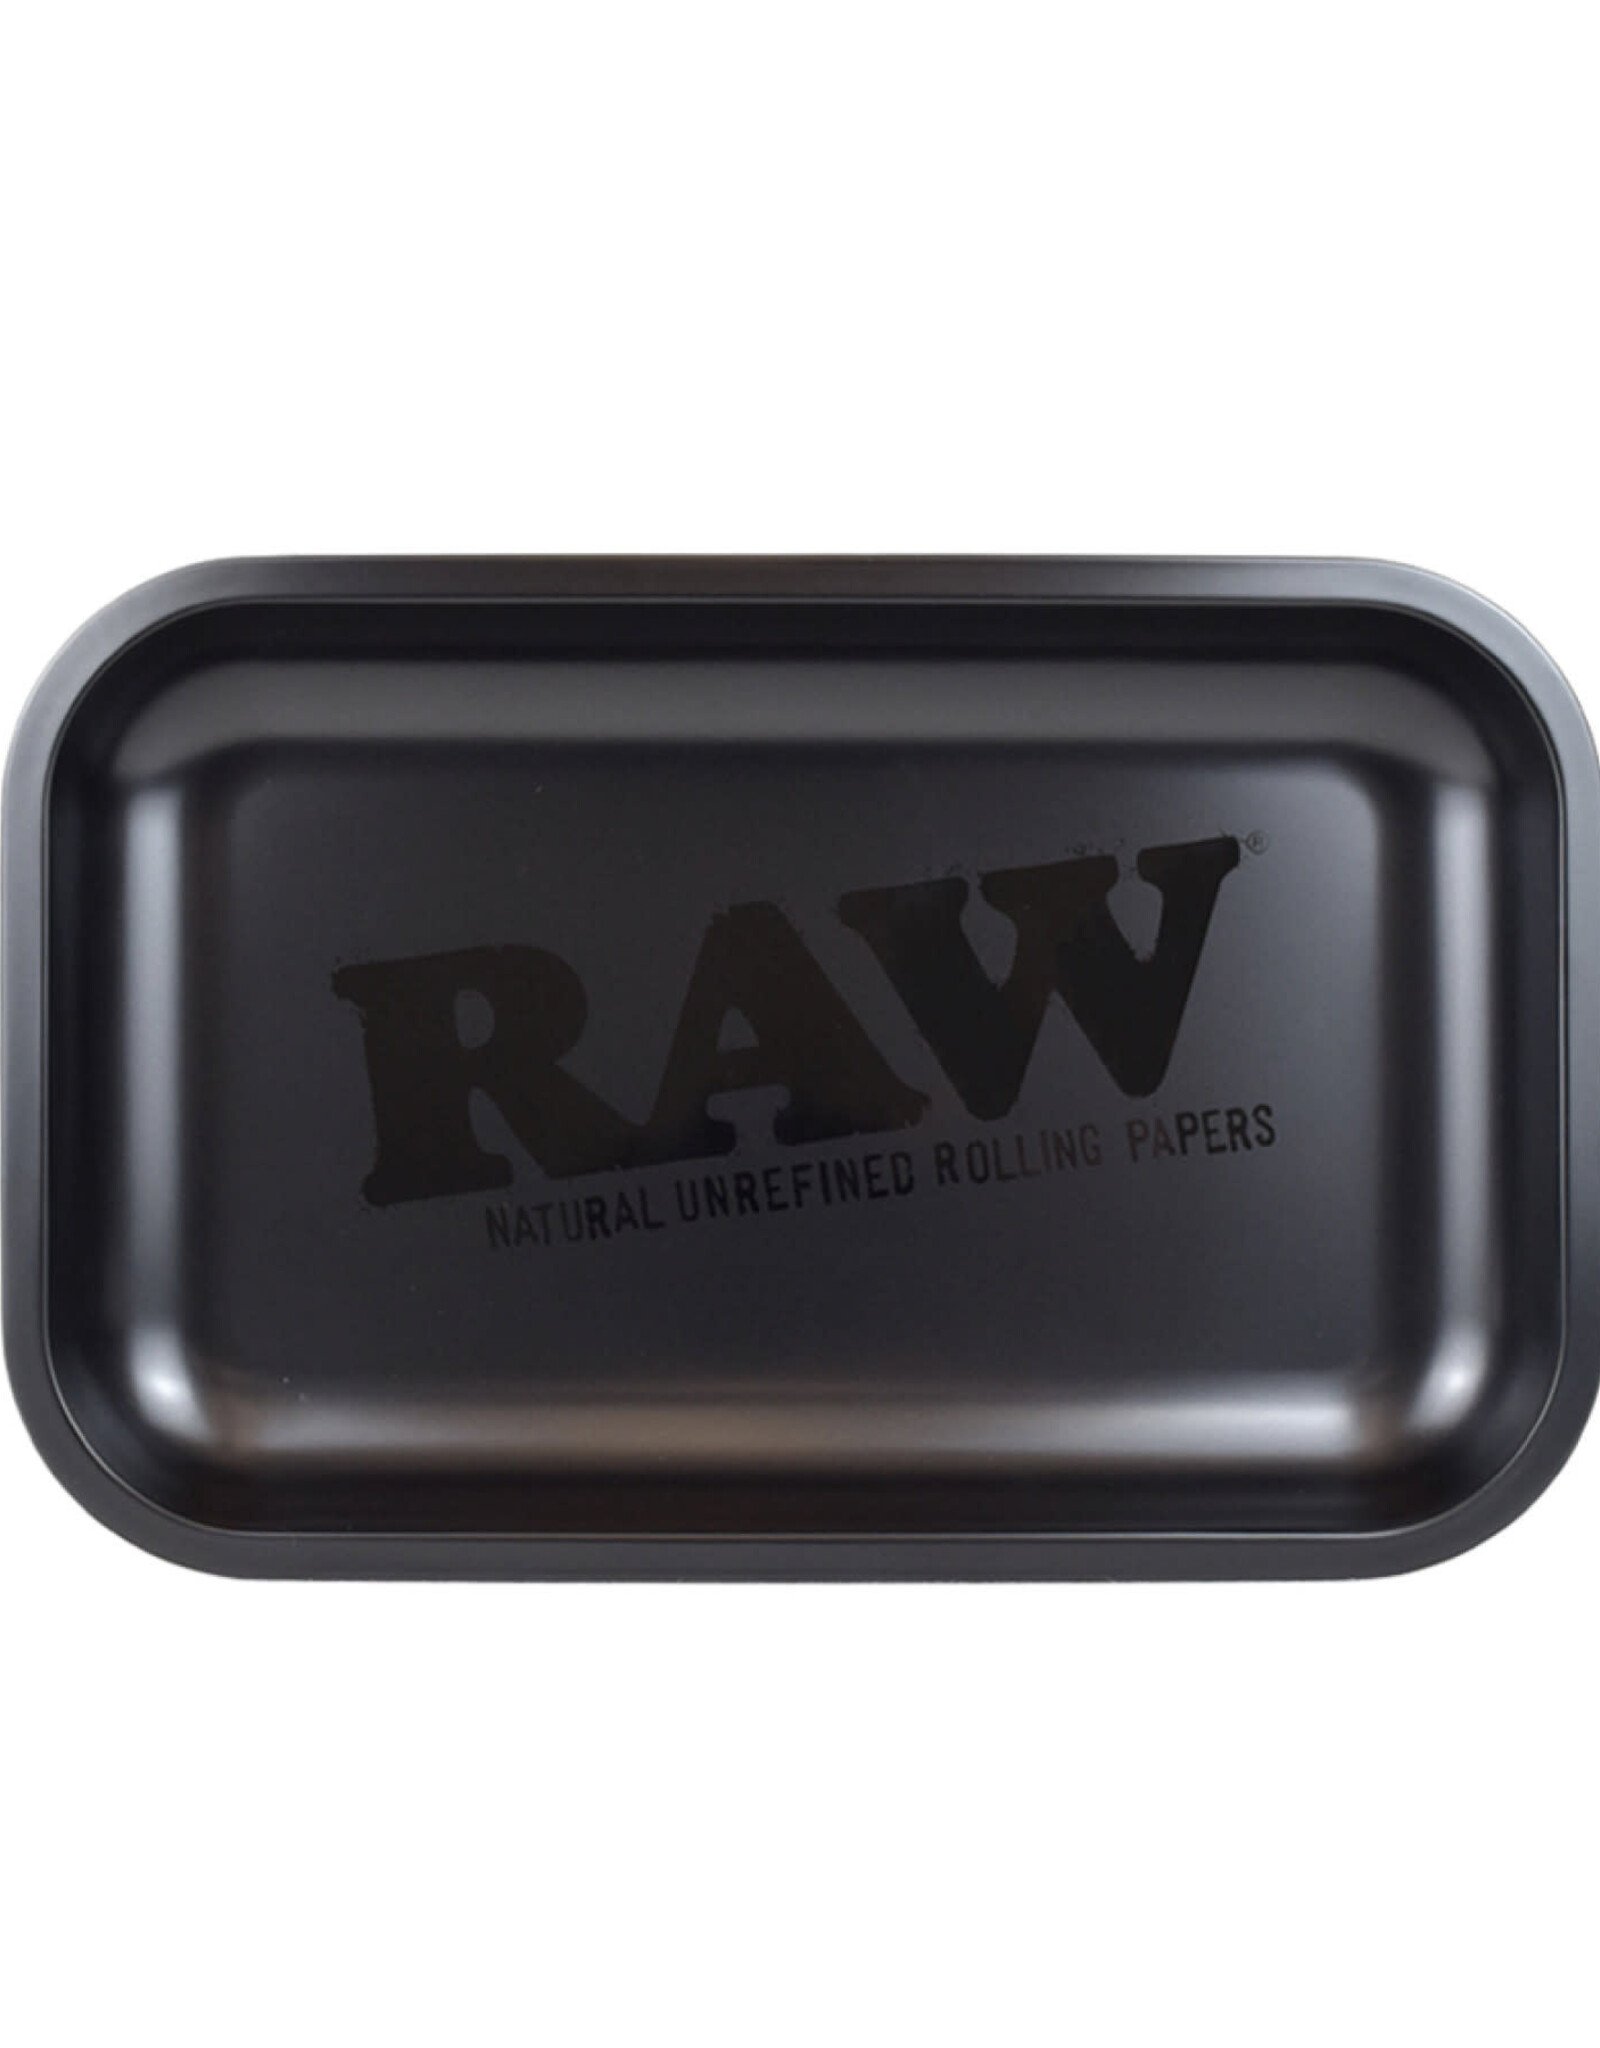 RAW RA017 Murdered Rolling Tray